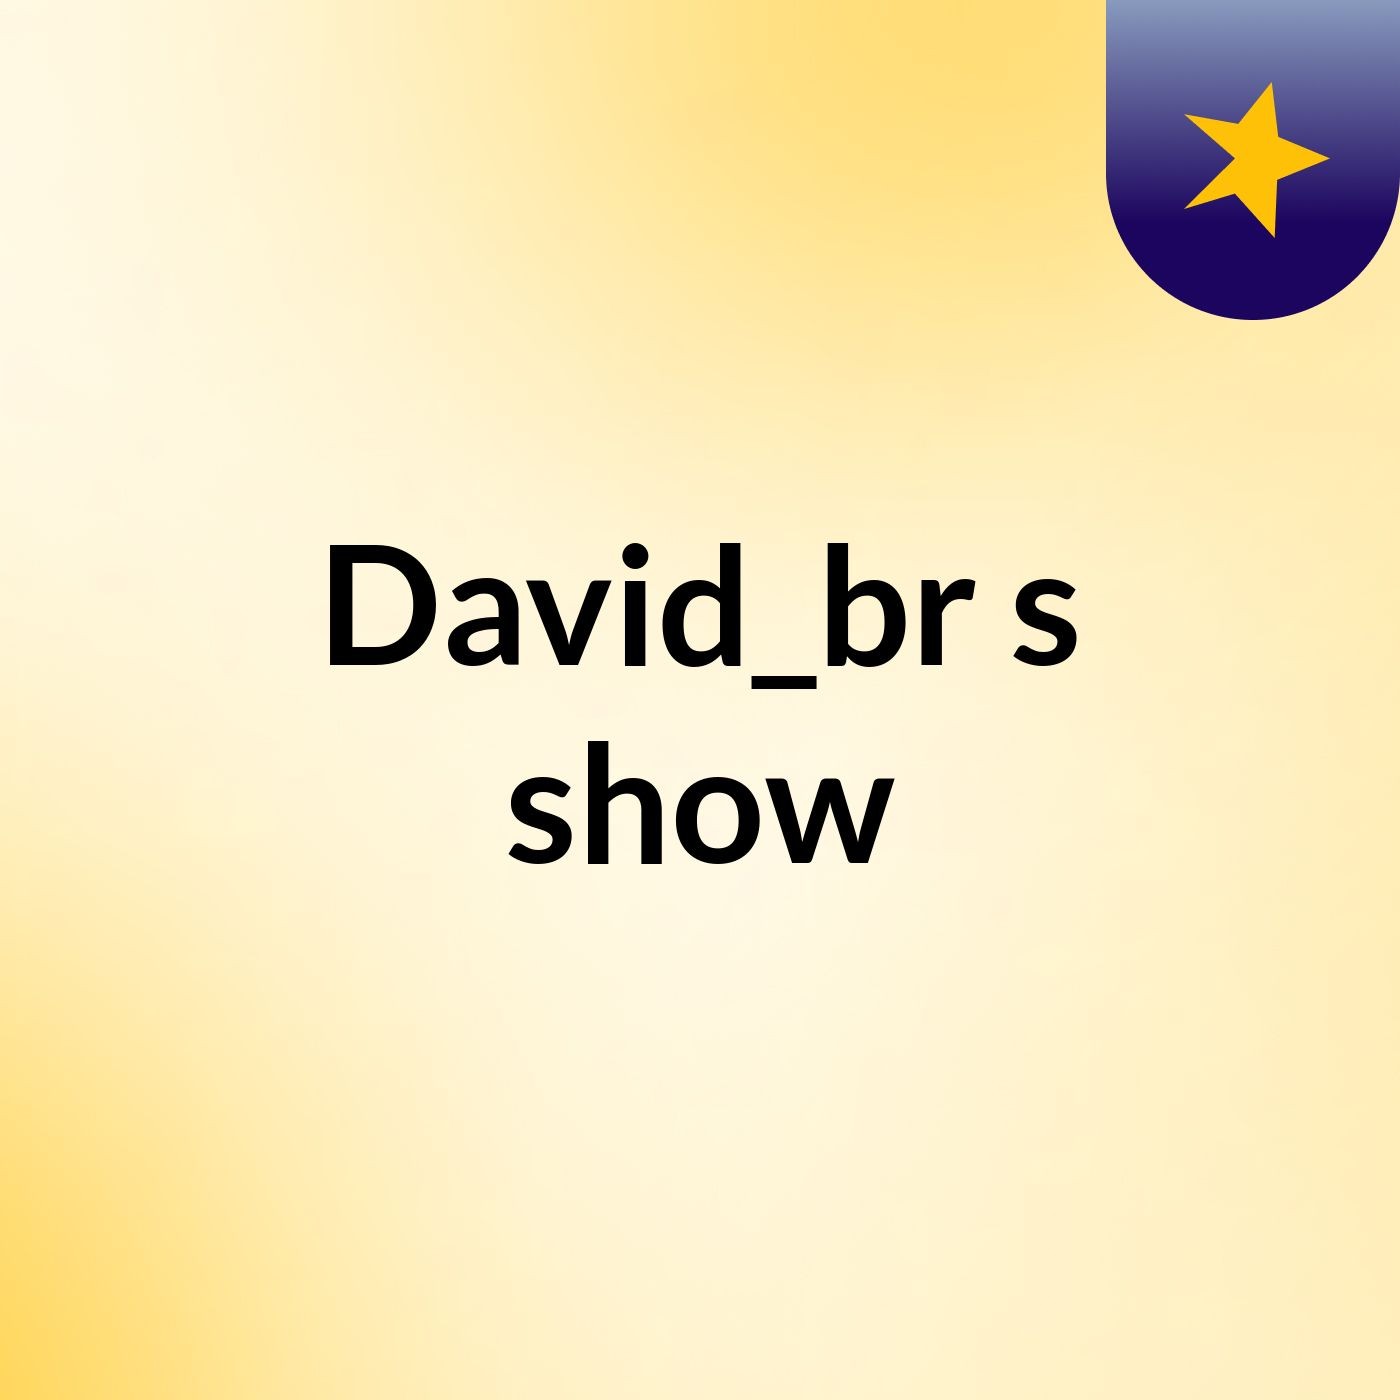 David_br's show